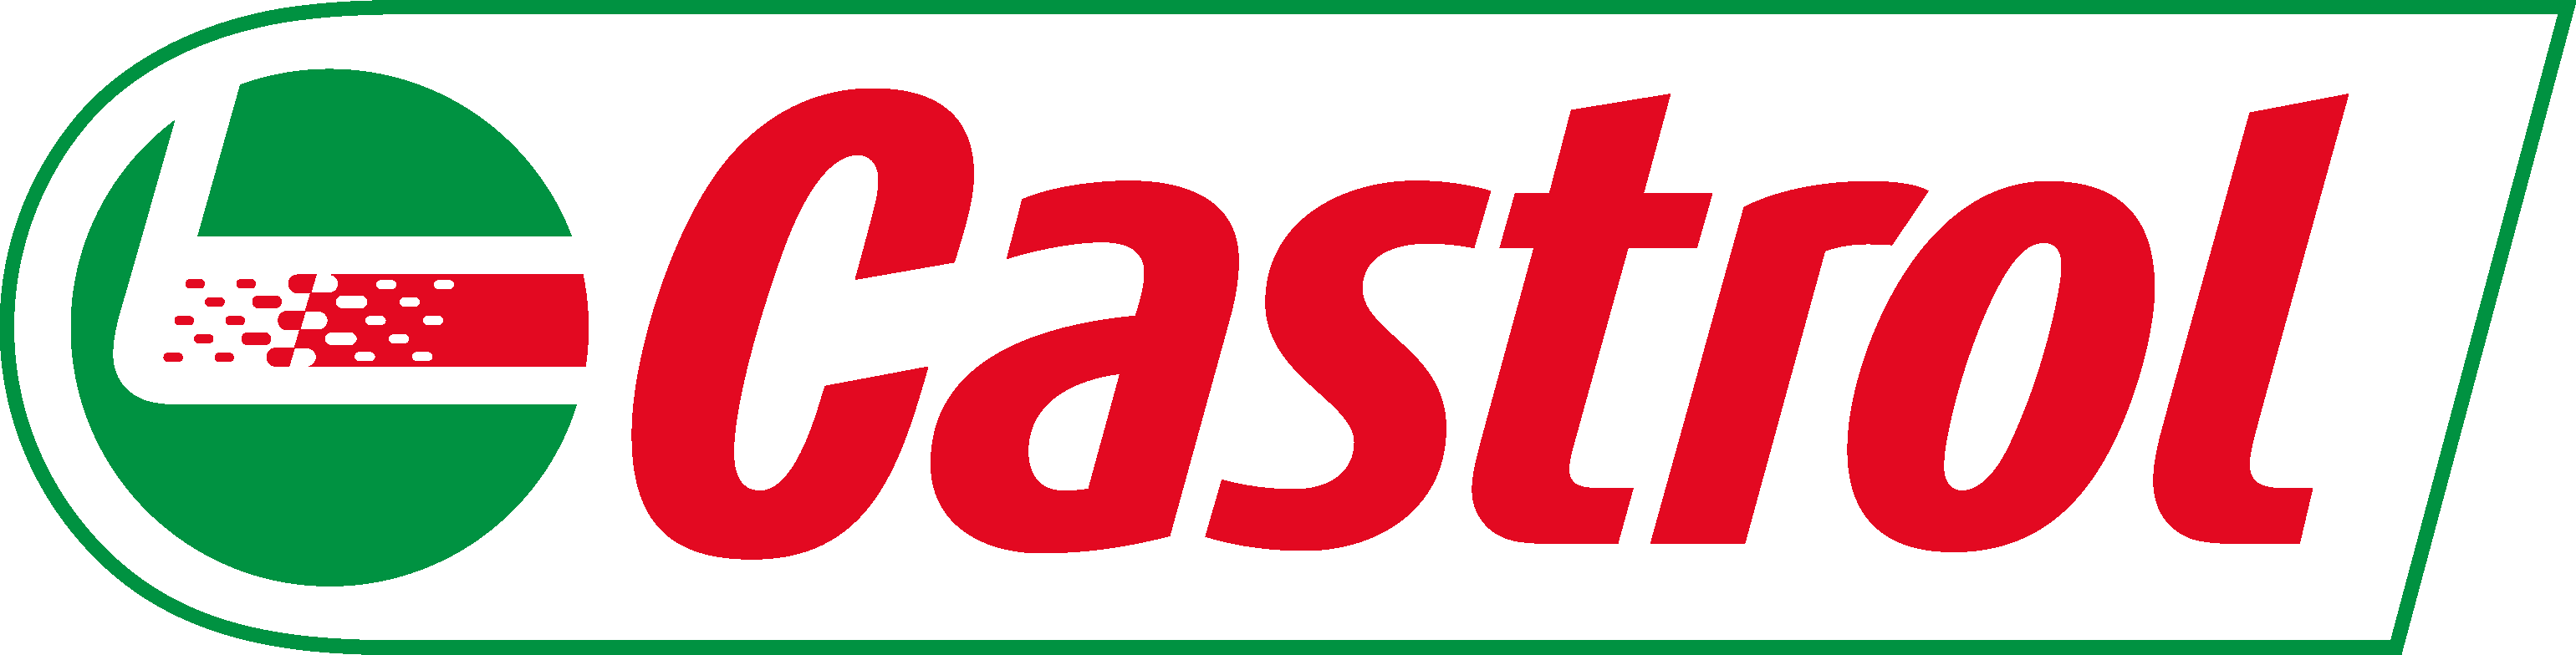 Castrol Logo png